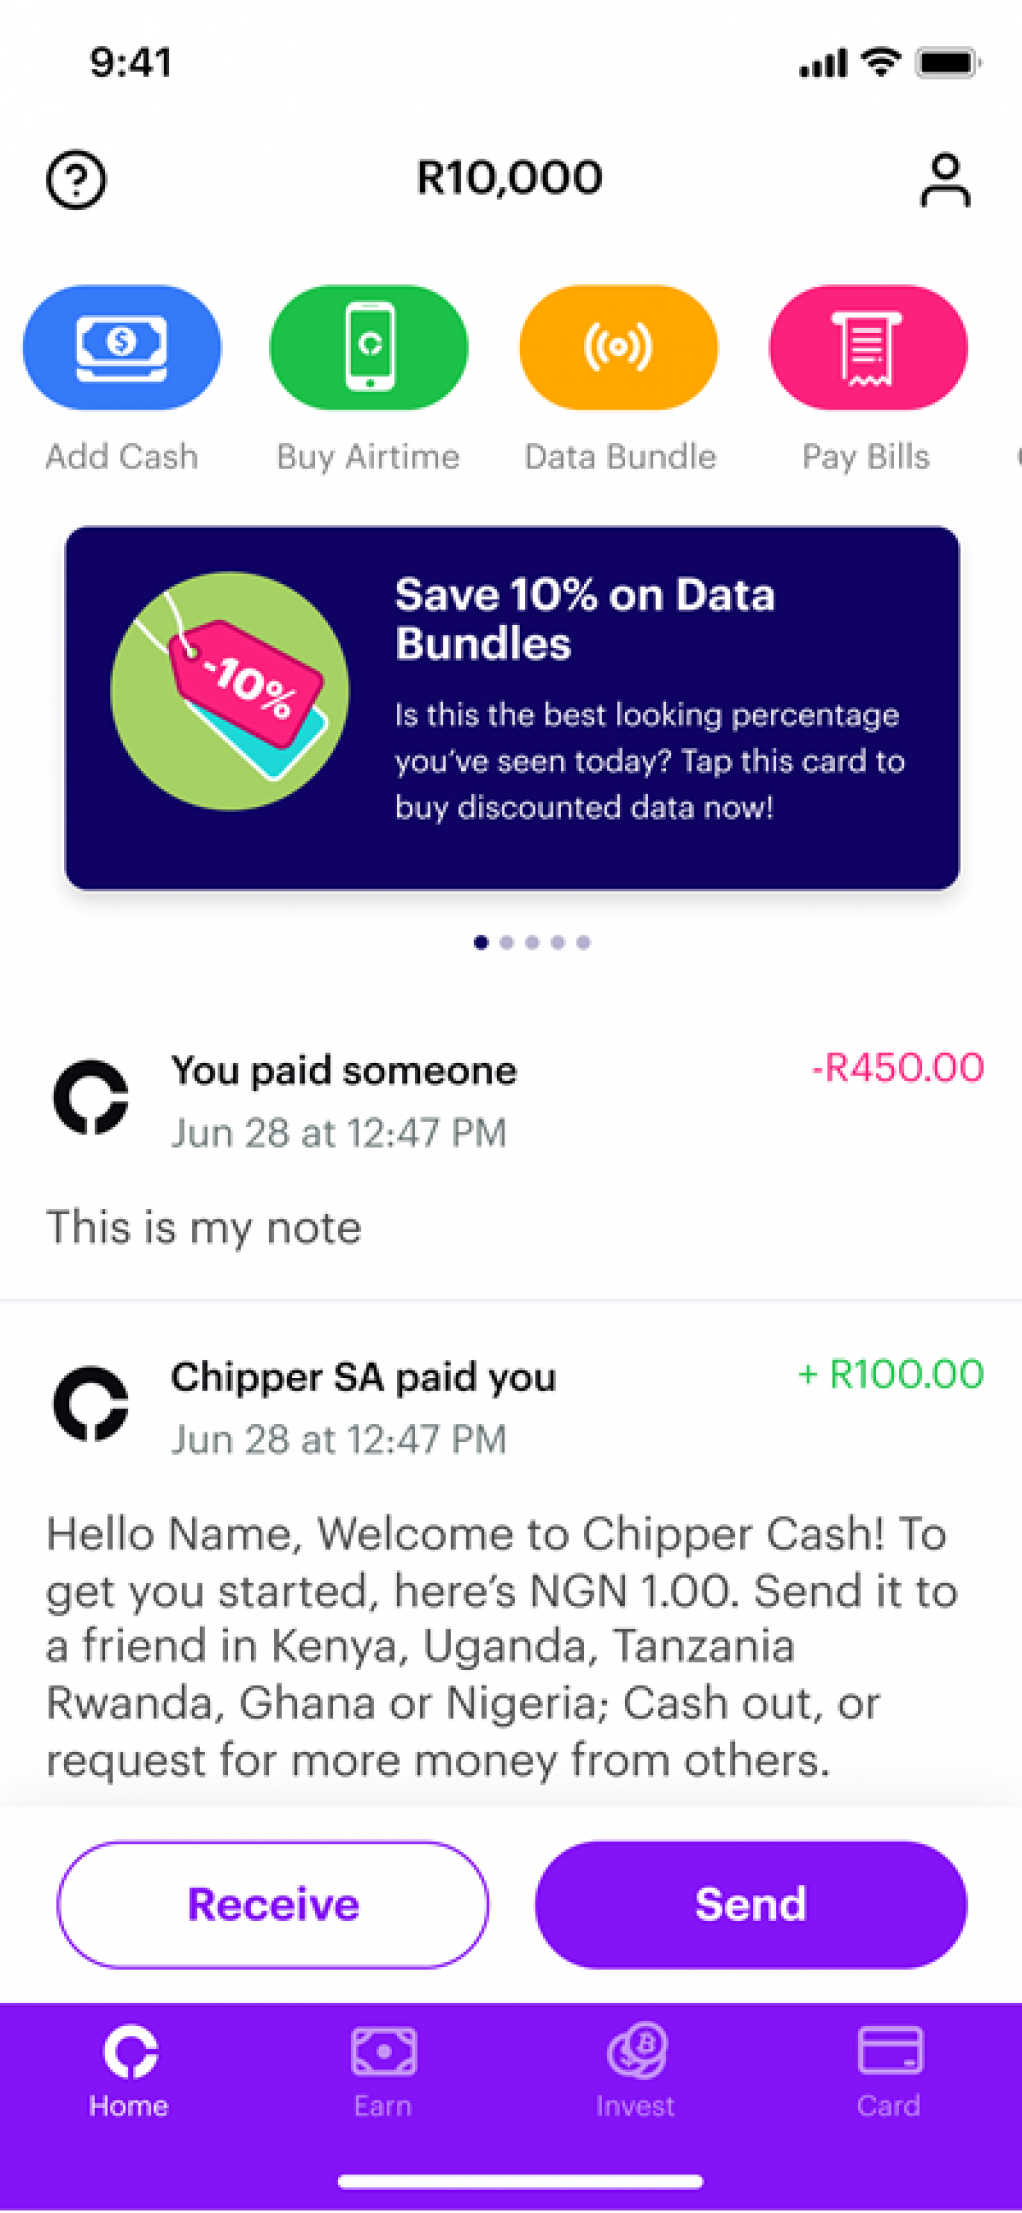 A snapshot of Chipper Cash interface